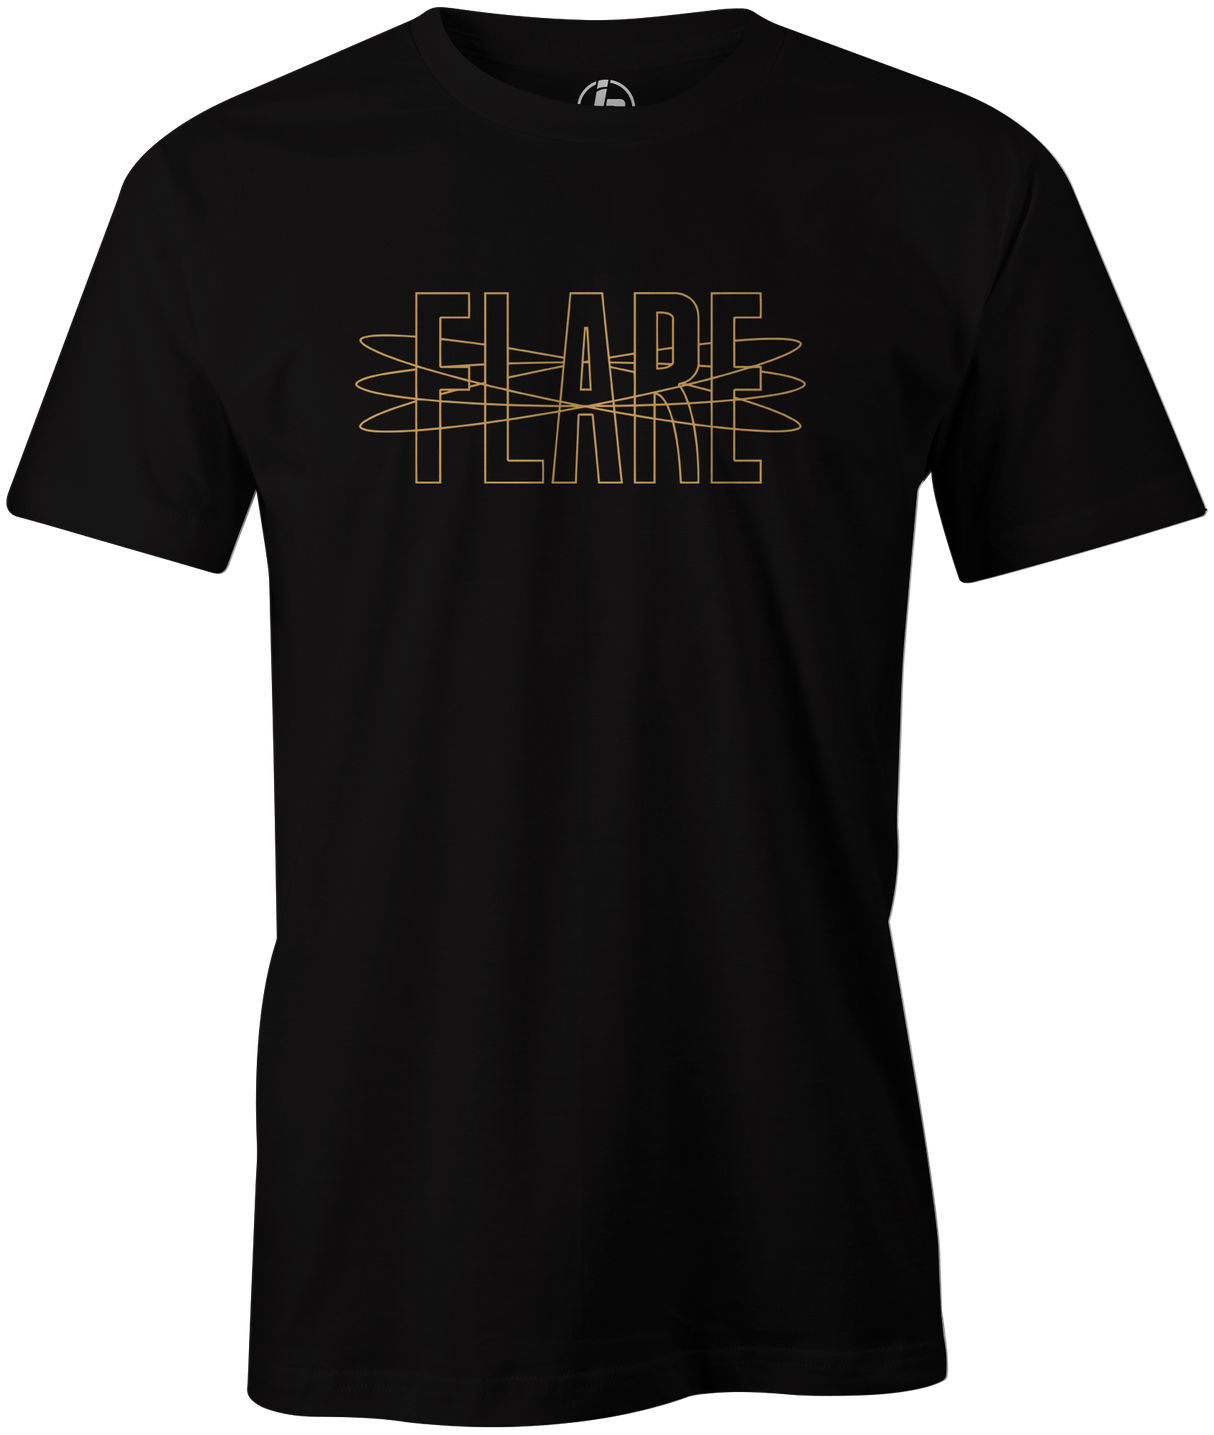 Track Flare Men's T-Shirt, Charcoal, track bowling, bowling ball, bowling ball logo, track, retro, old school, throwback, vintage, tshirt, tee, tee-shirt, tee shirt.